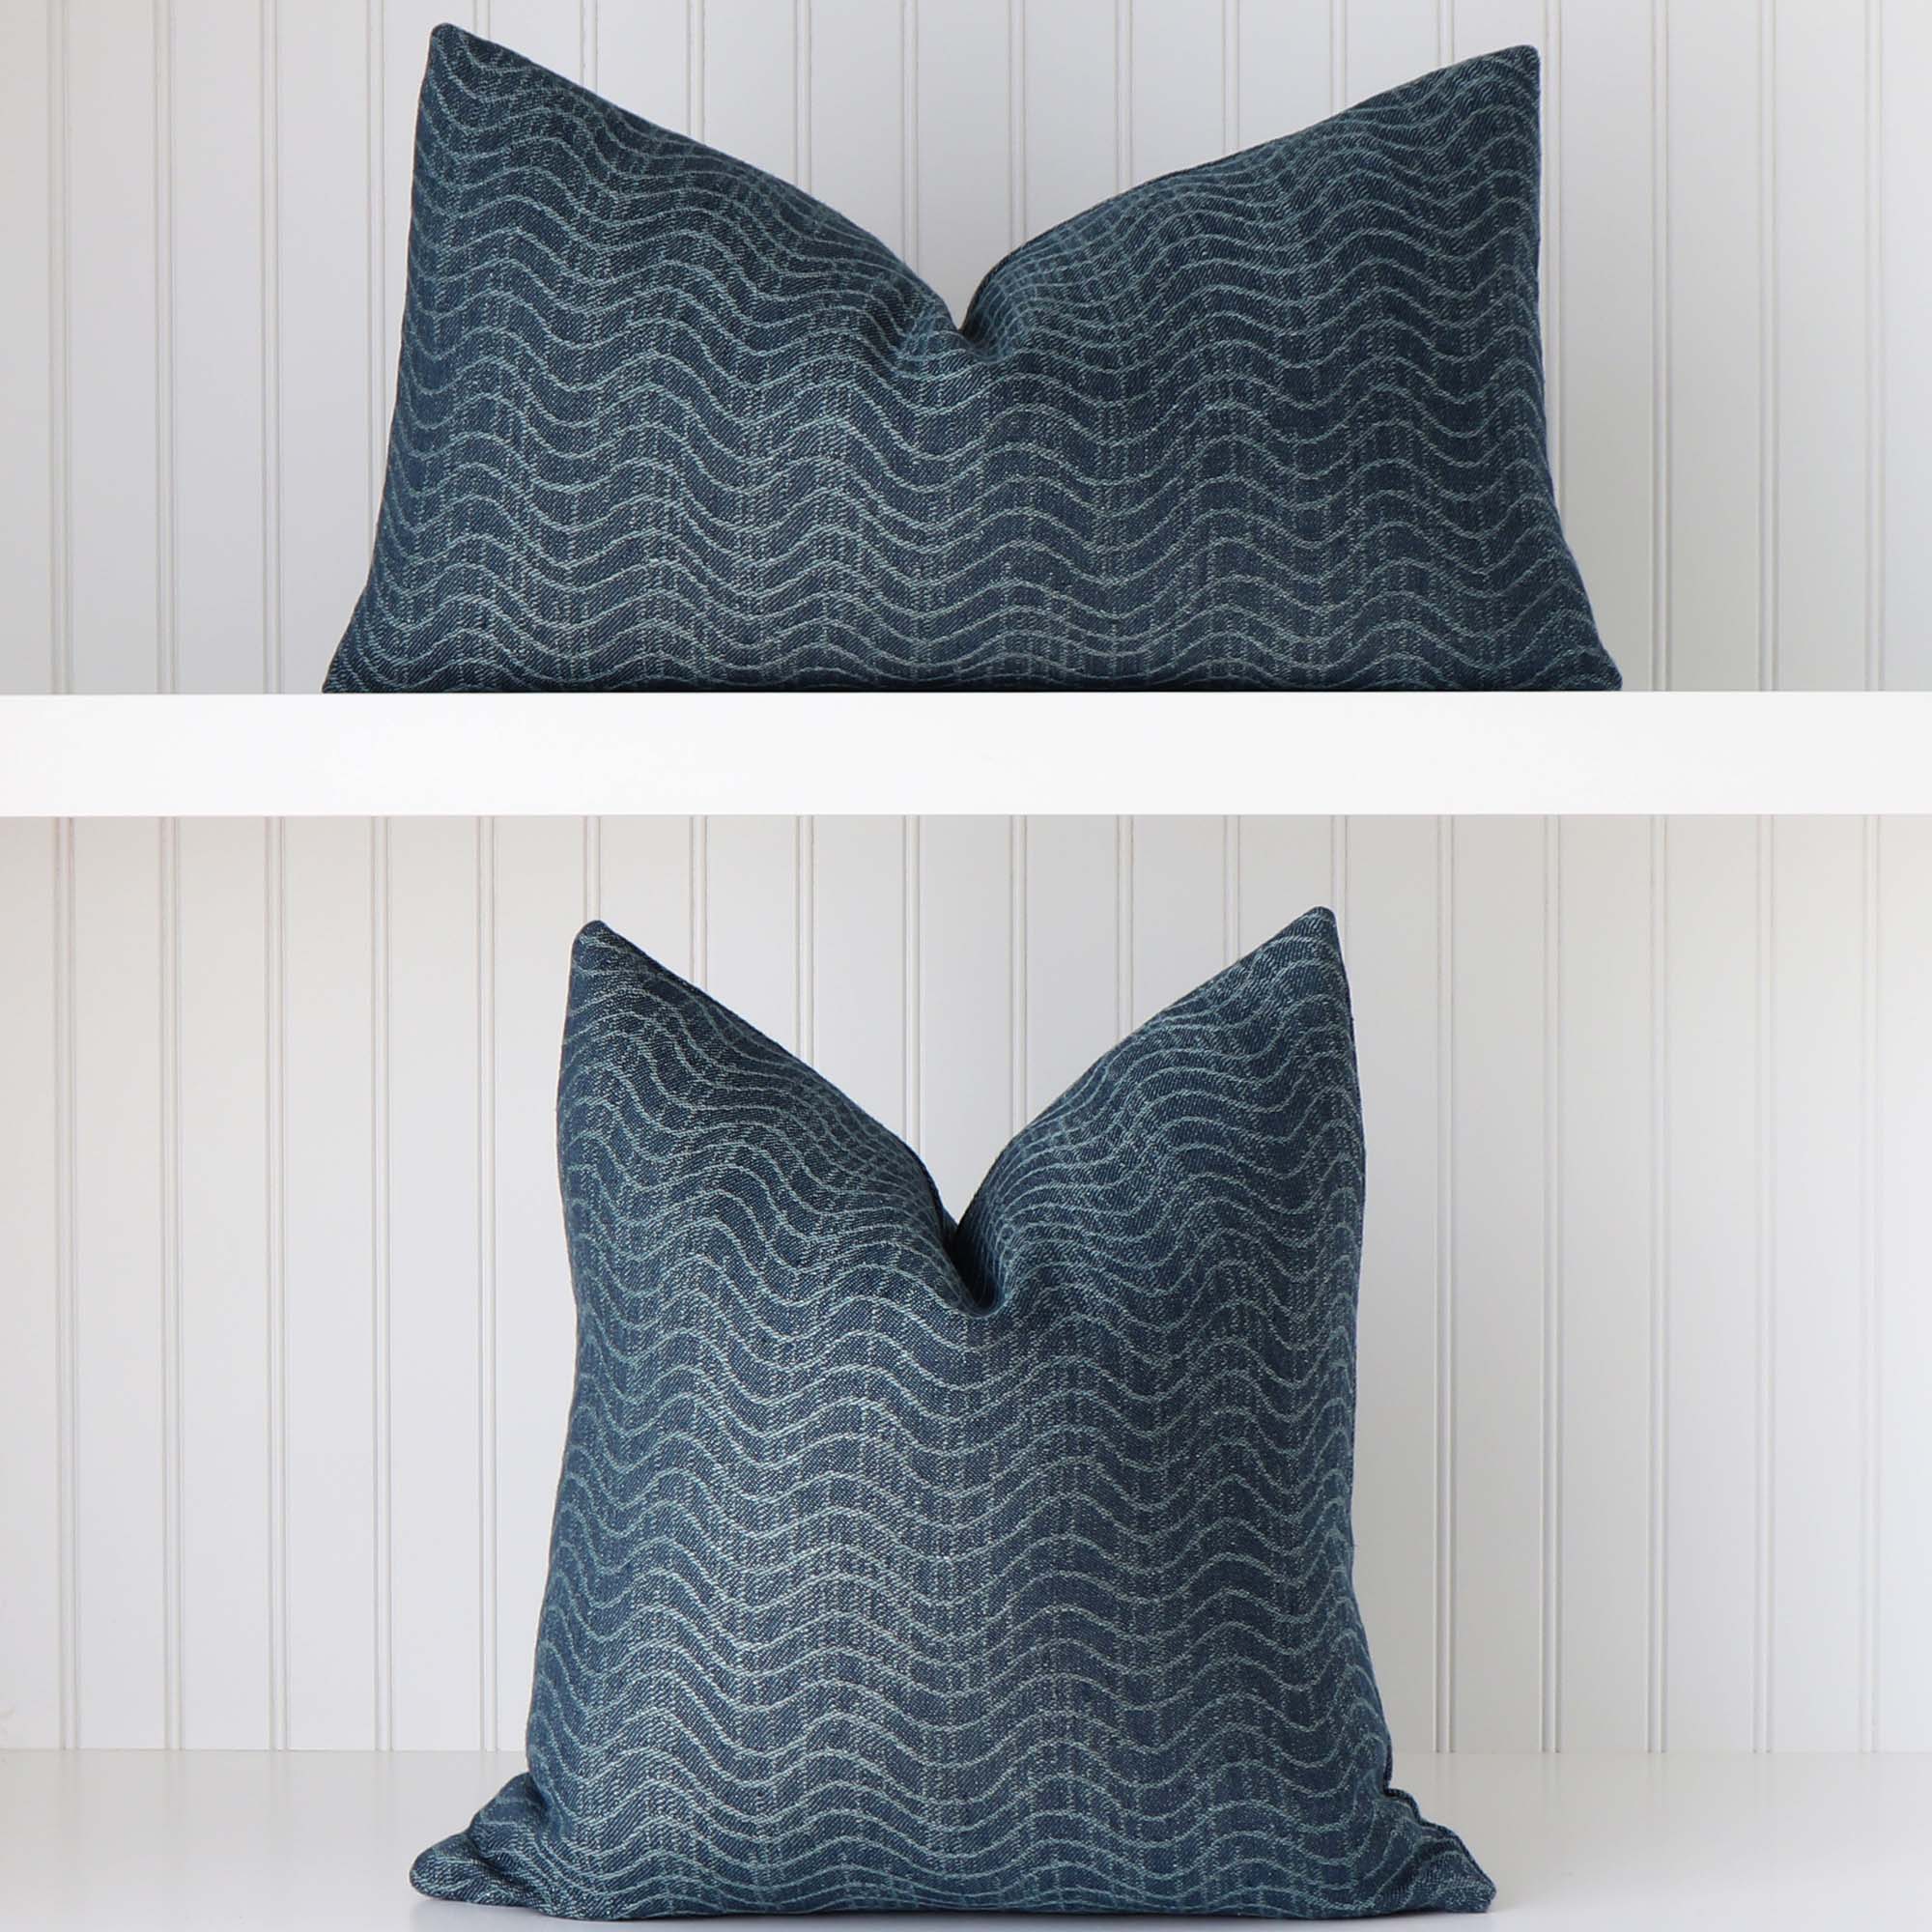 Kelly Wearstler LeeJofa Dadami Marlin Cobalt Denim Blue Woven Linen Striped Designer Throw Pillow Cover Square and Lumbar Sizes